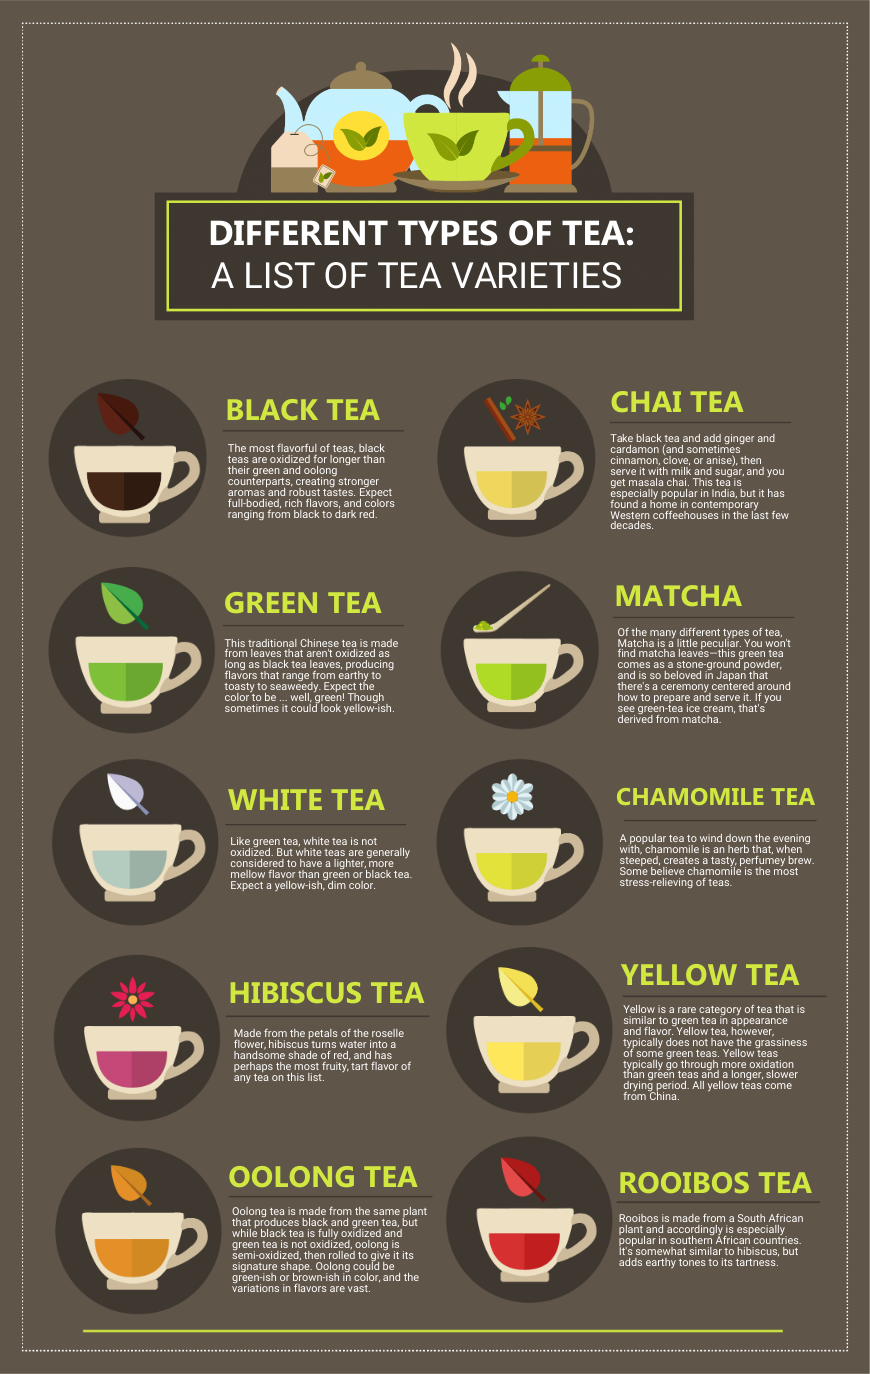 an infographic about tea varities.